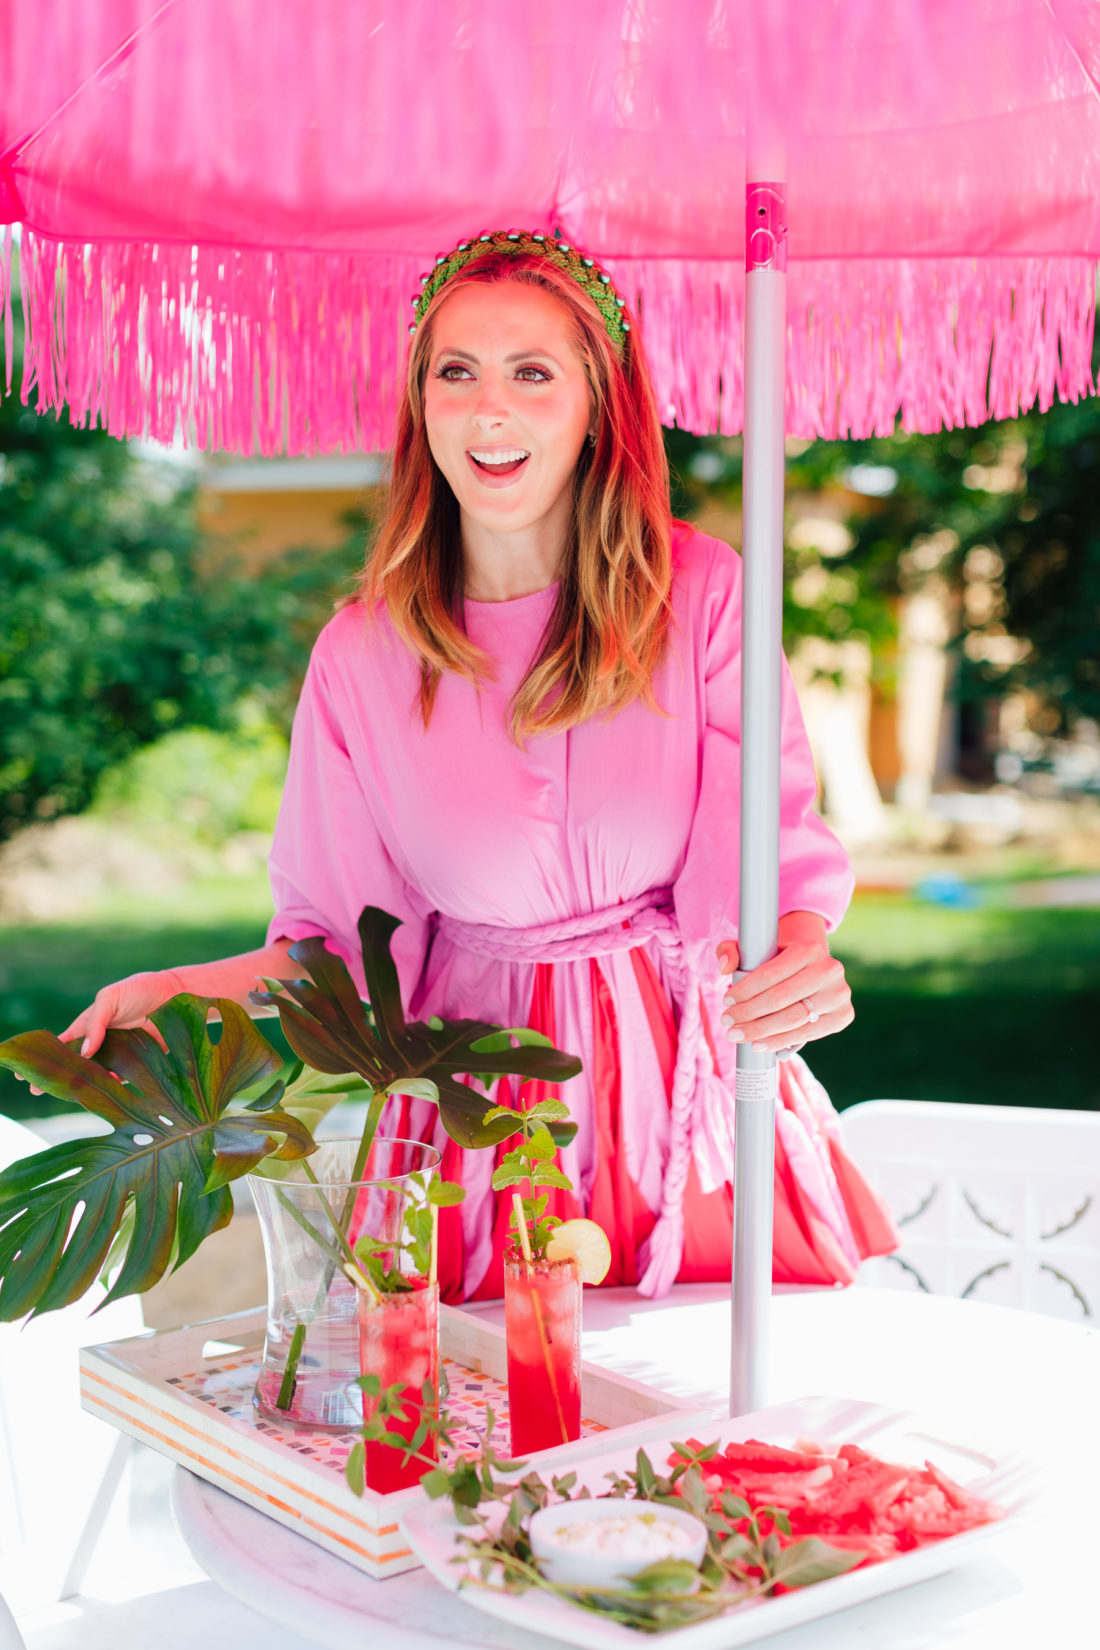 Eva Amurri Martino sets up a colorful spread outdoors underneath a pink umbrella